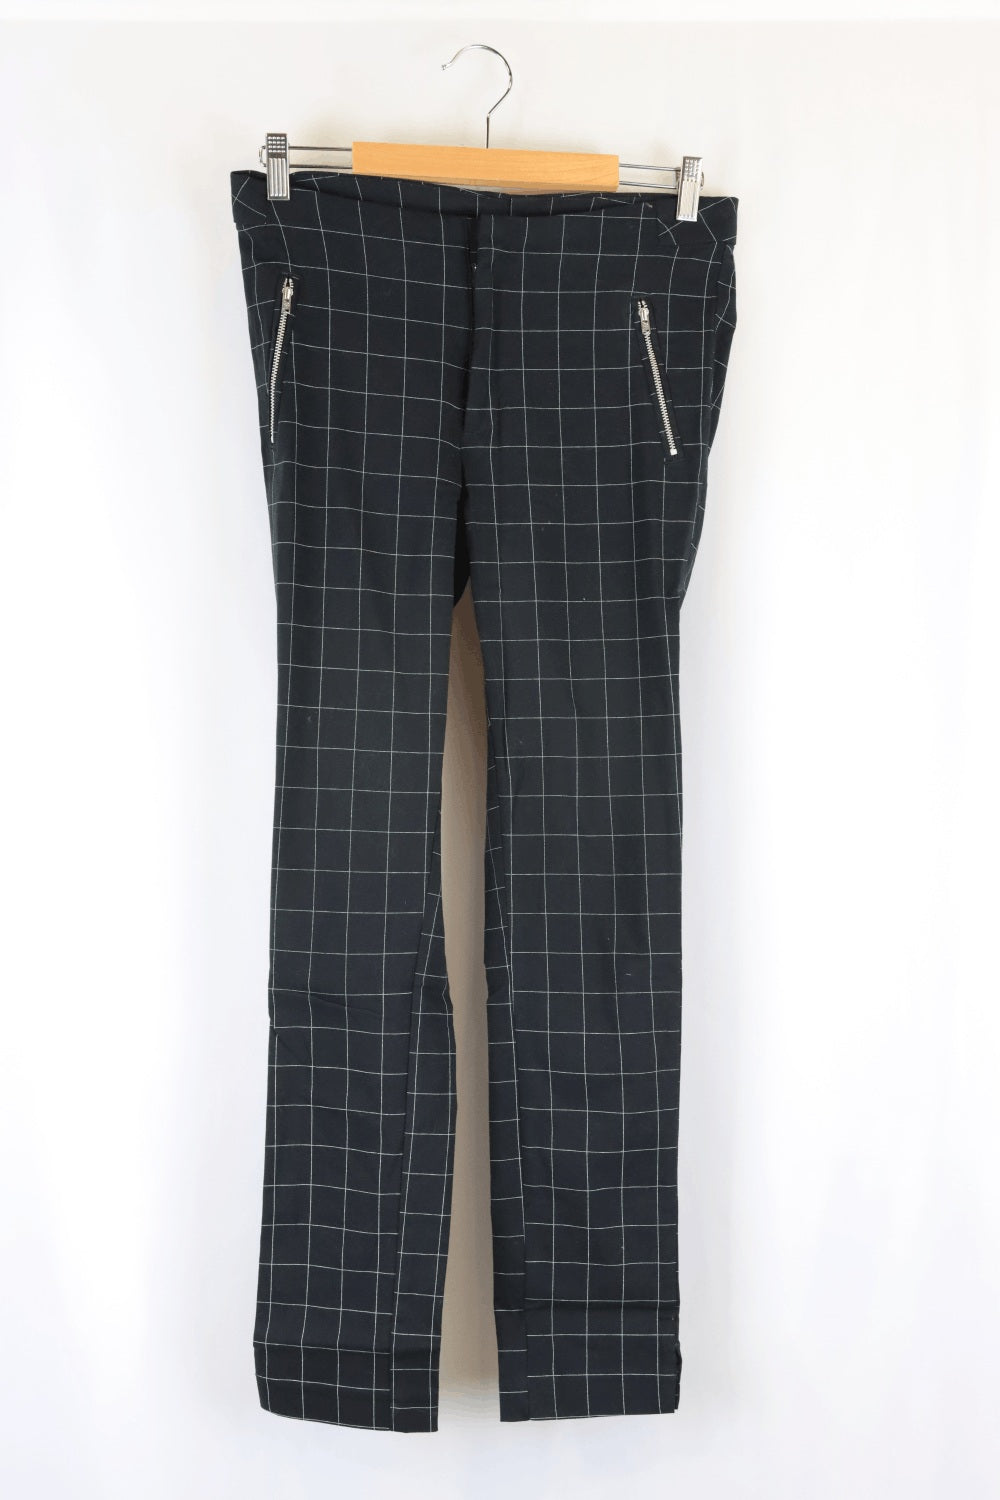 Emerson Black Pants With White Stripes 10